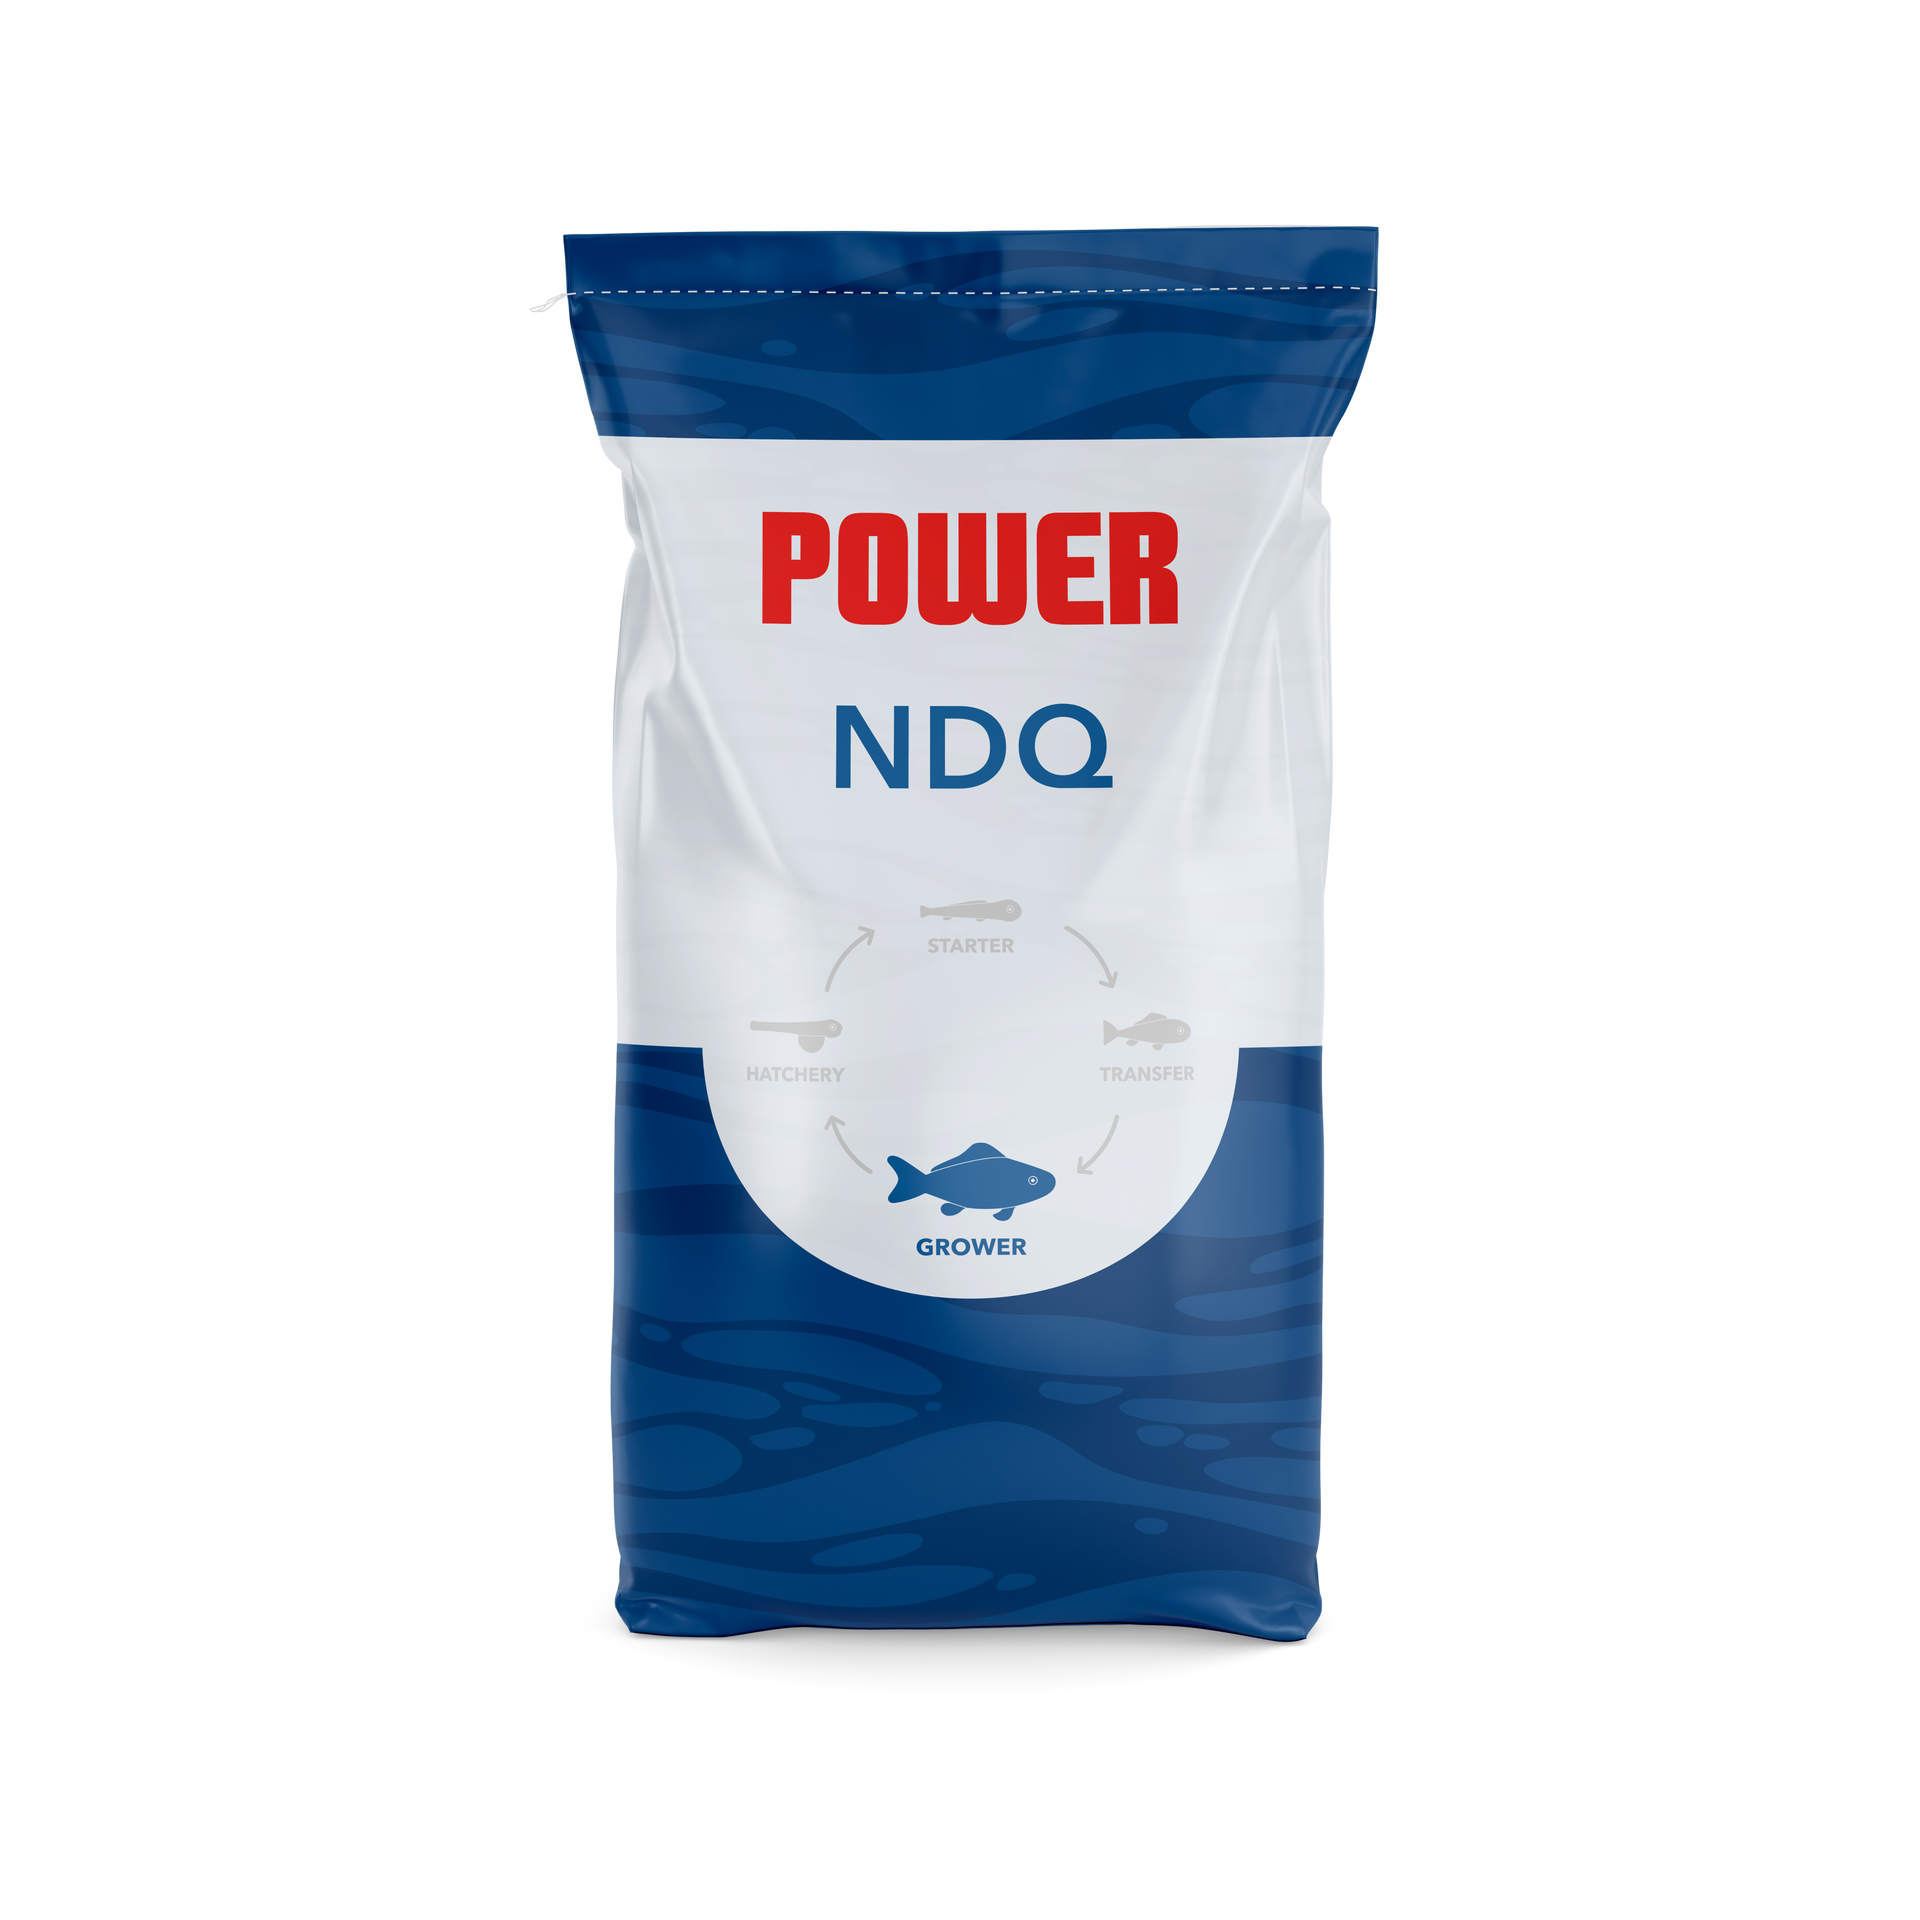 Power NDQ feed for atlantic salmon in Australia